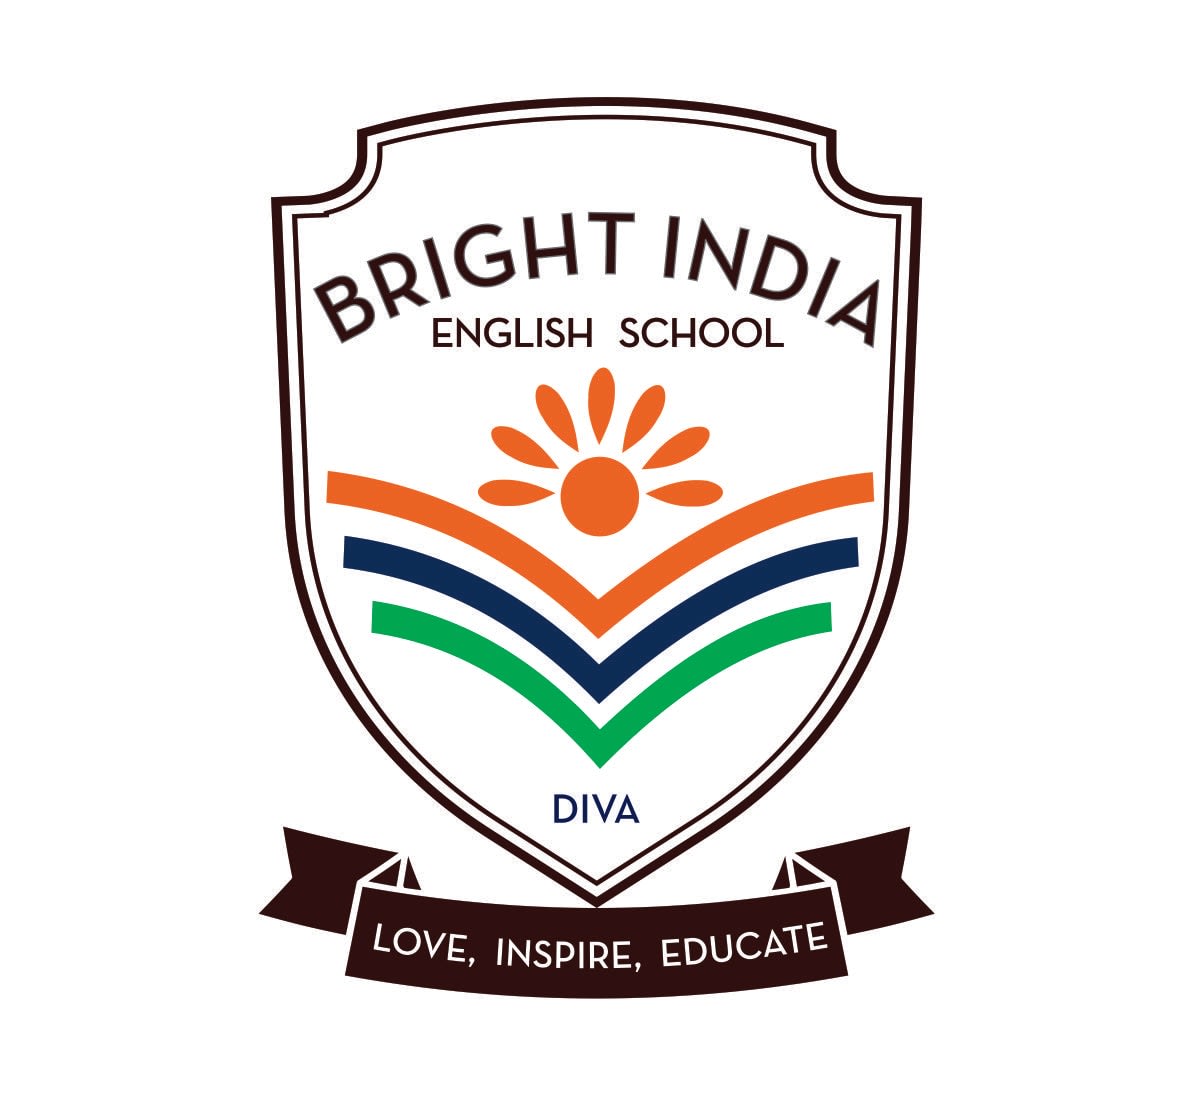 Bright India English School